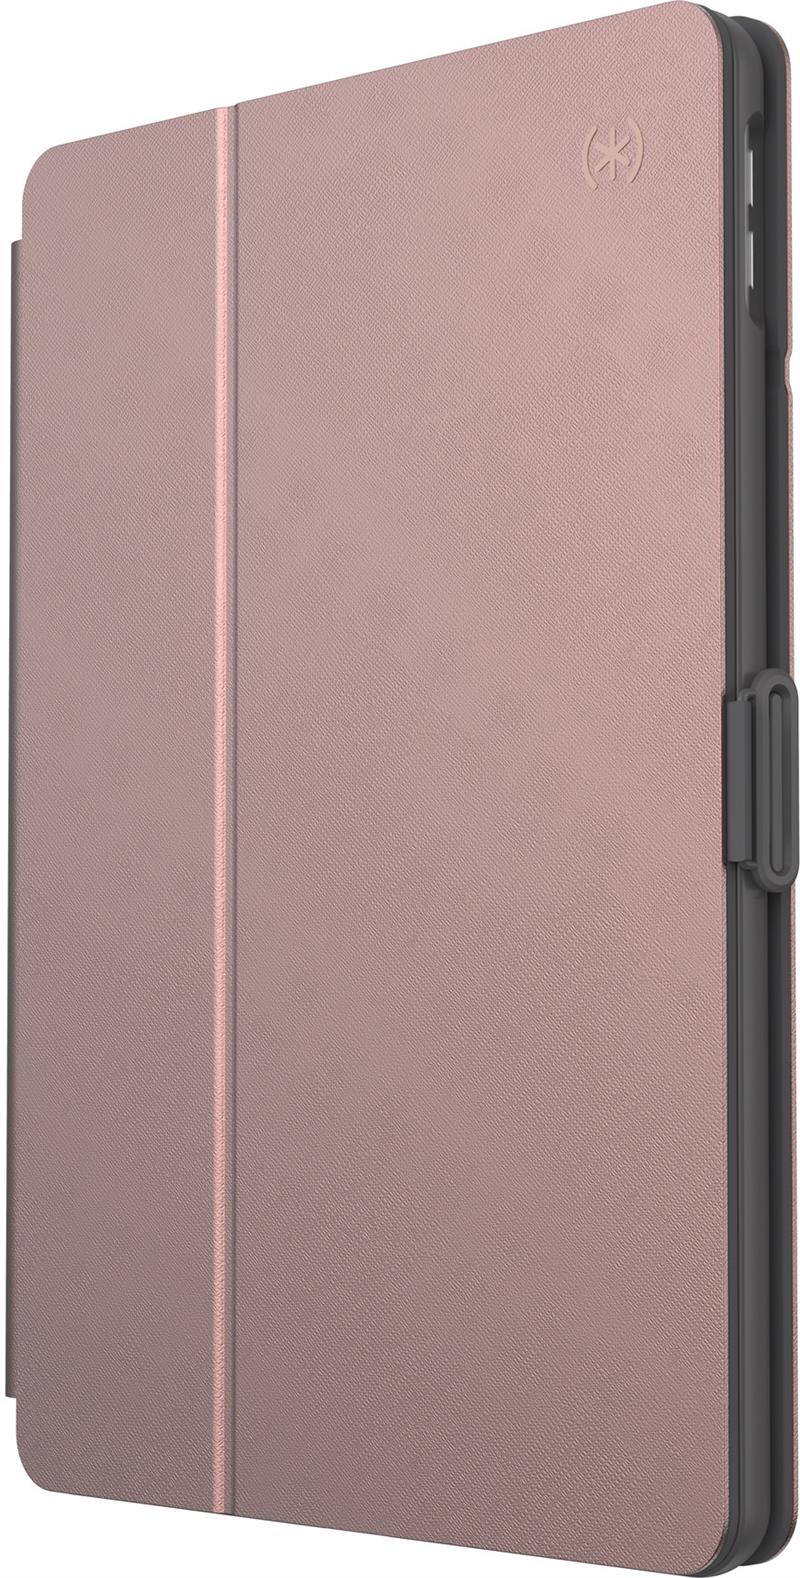 Speck Balance Folio Metallic Case Apple iPad 10.2 (2019) Rose Gold